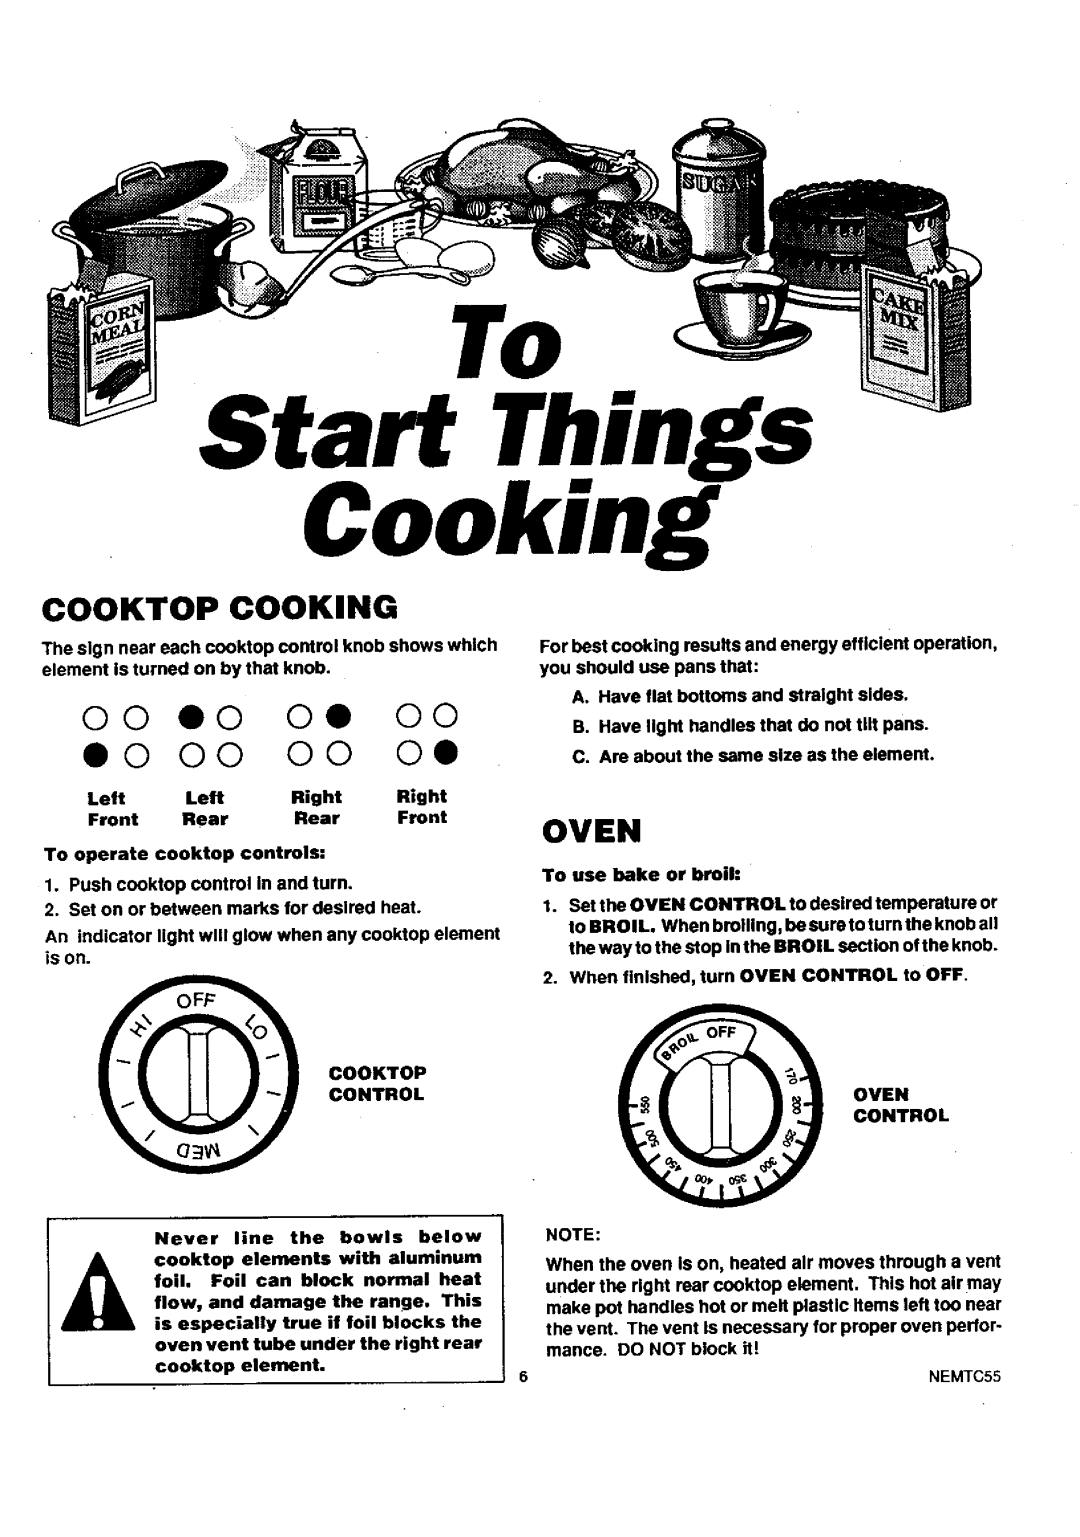 Sears 45221, 45321, 45320 warranty Cooktop Cooking, Oven, Start Things, O0 eO Oe O0 0 O0 O0 O 